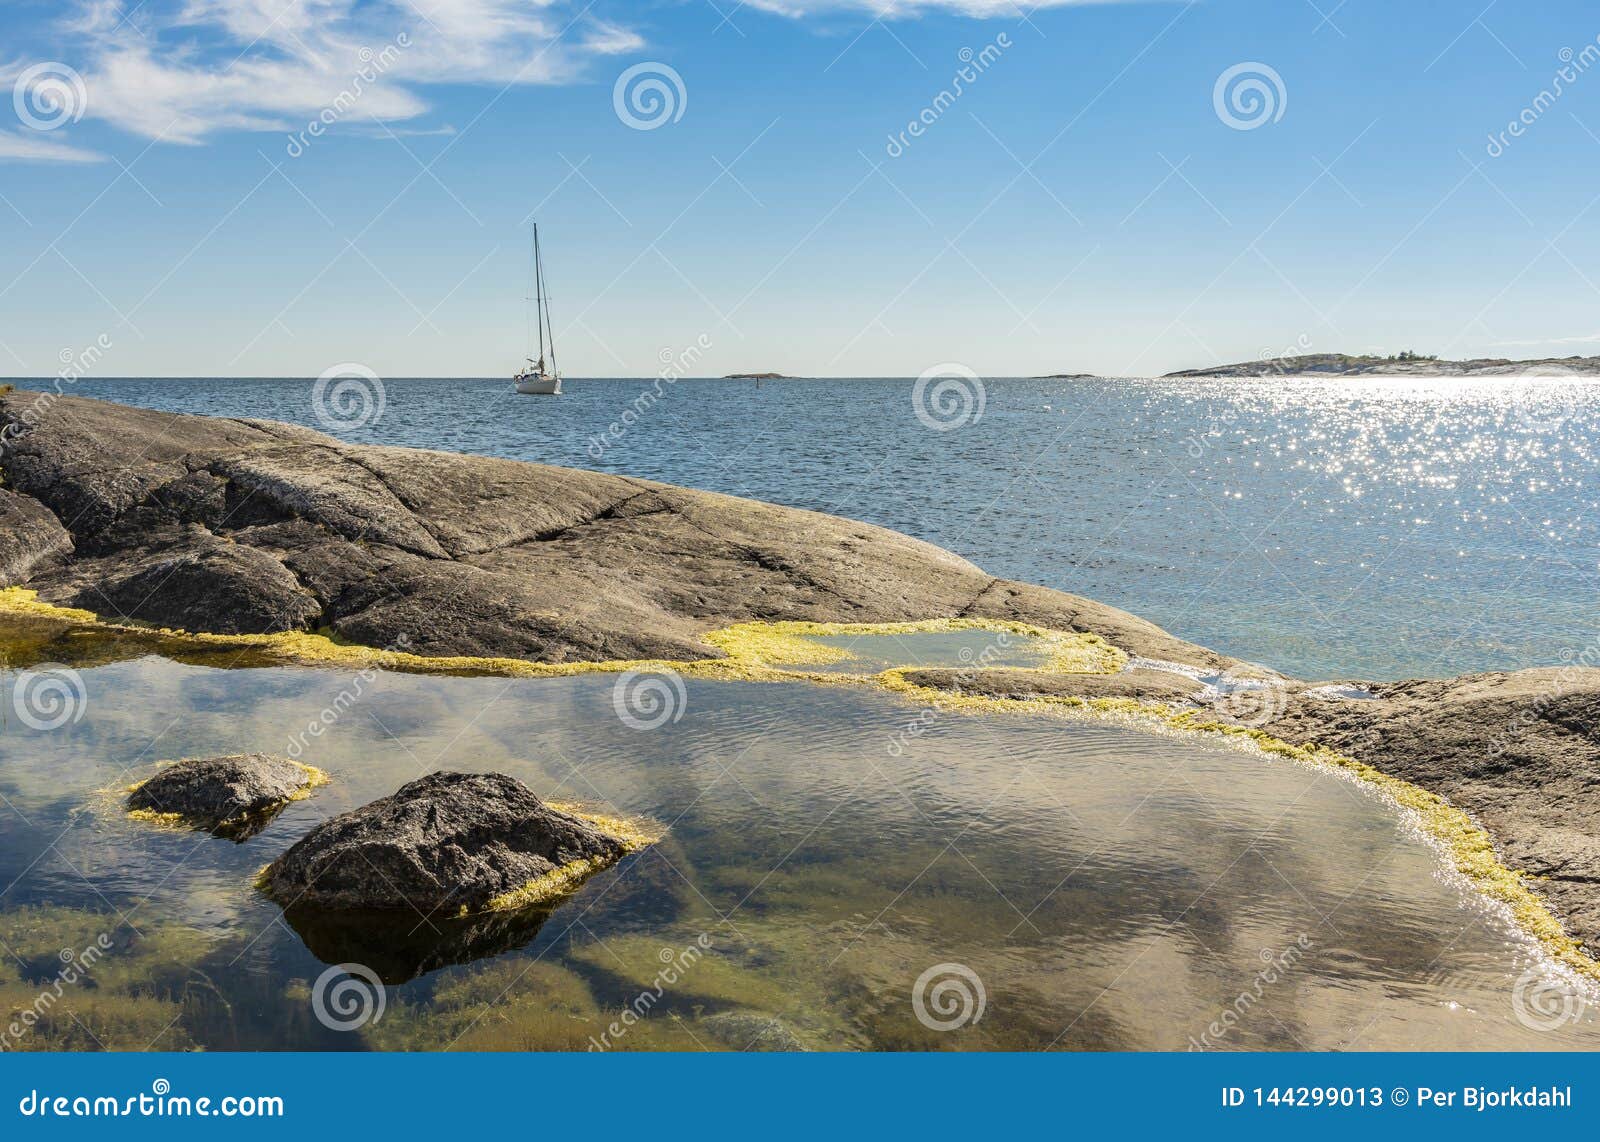 rock pool huvudskÃÂ¤r stockholm archipelago